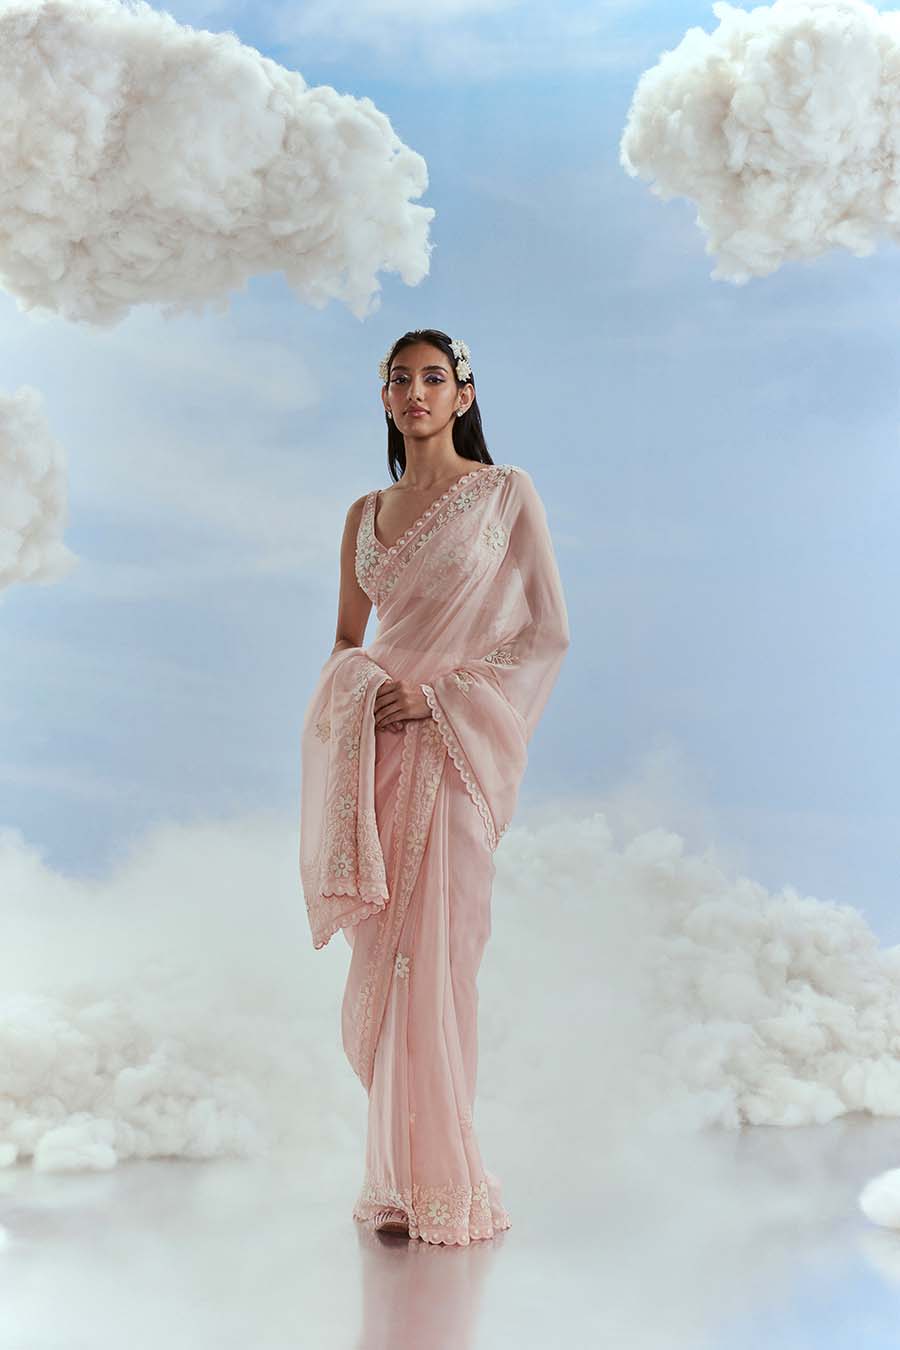 Ritu Varma Photoshoot Stills – Silverscreen.in | Saree photoshoot, Saree  models, Photography poses women